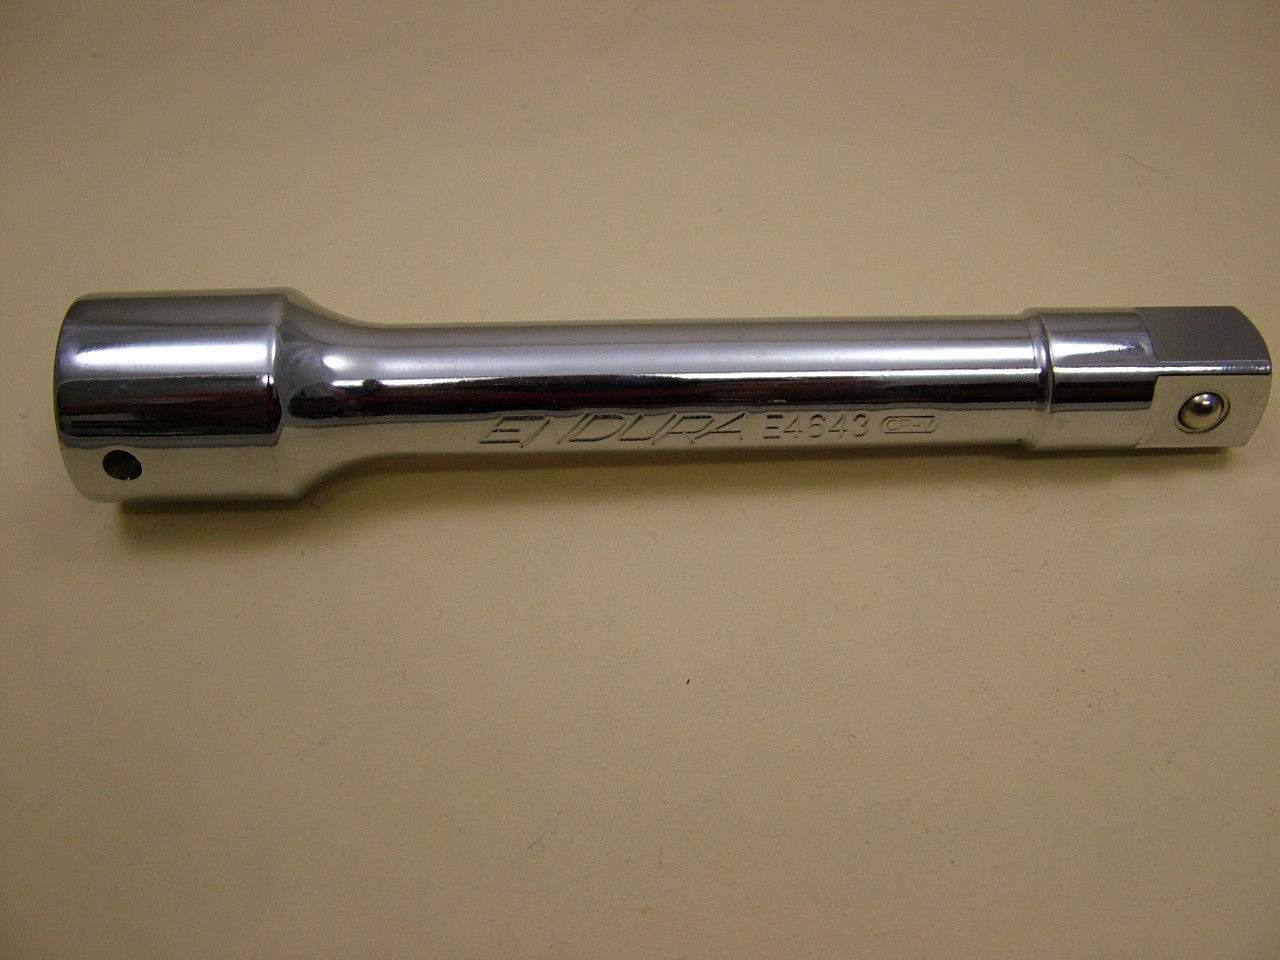 3/4" drive extension bar, 200mm (8") long, chrome vanadium